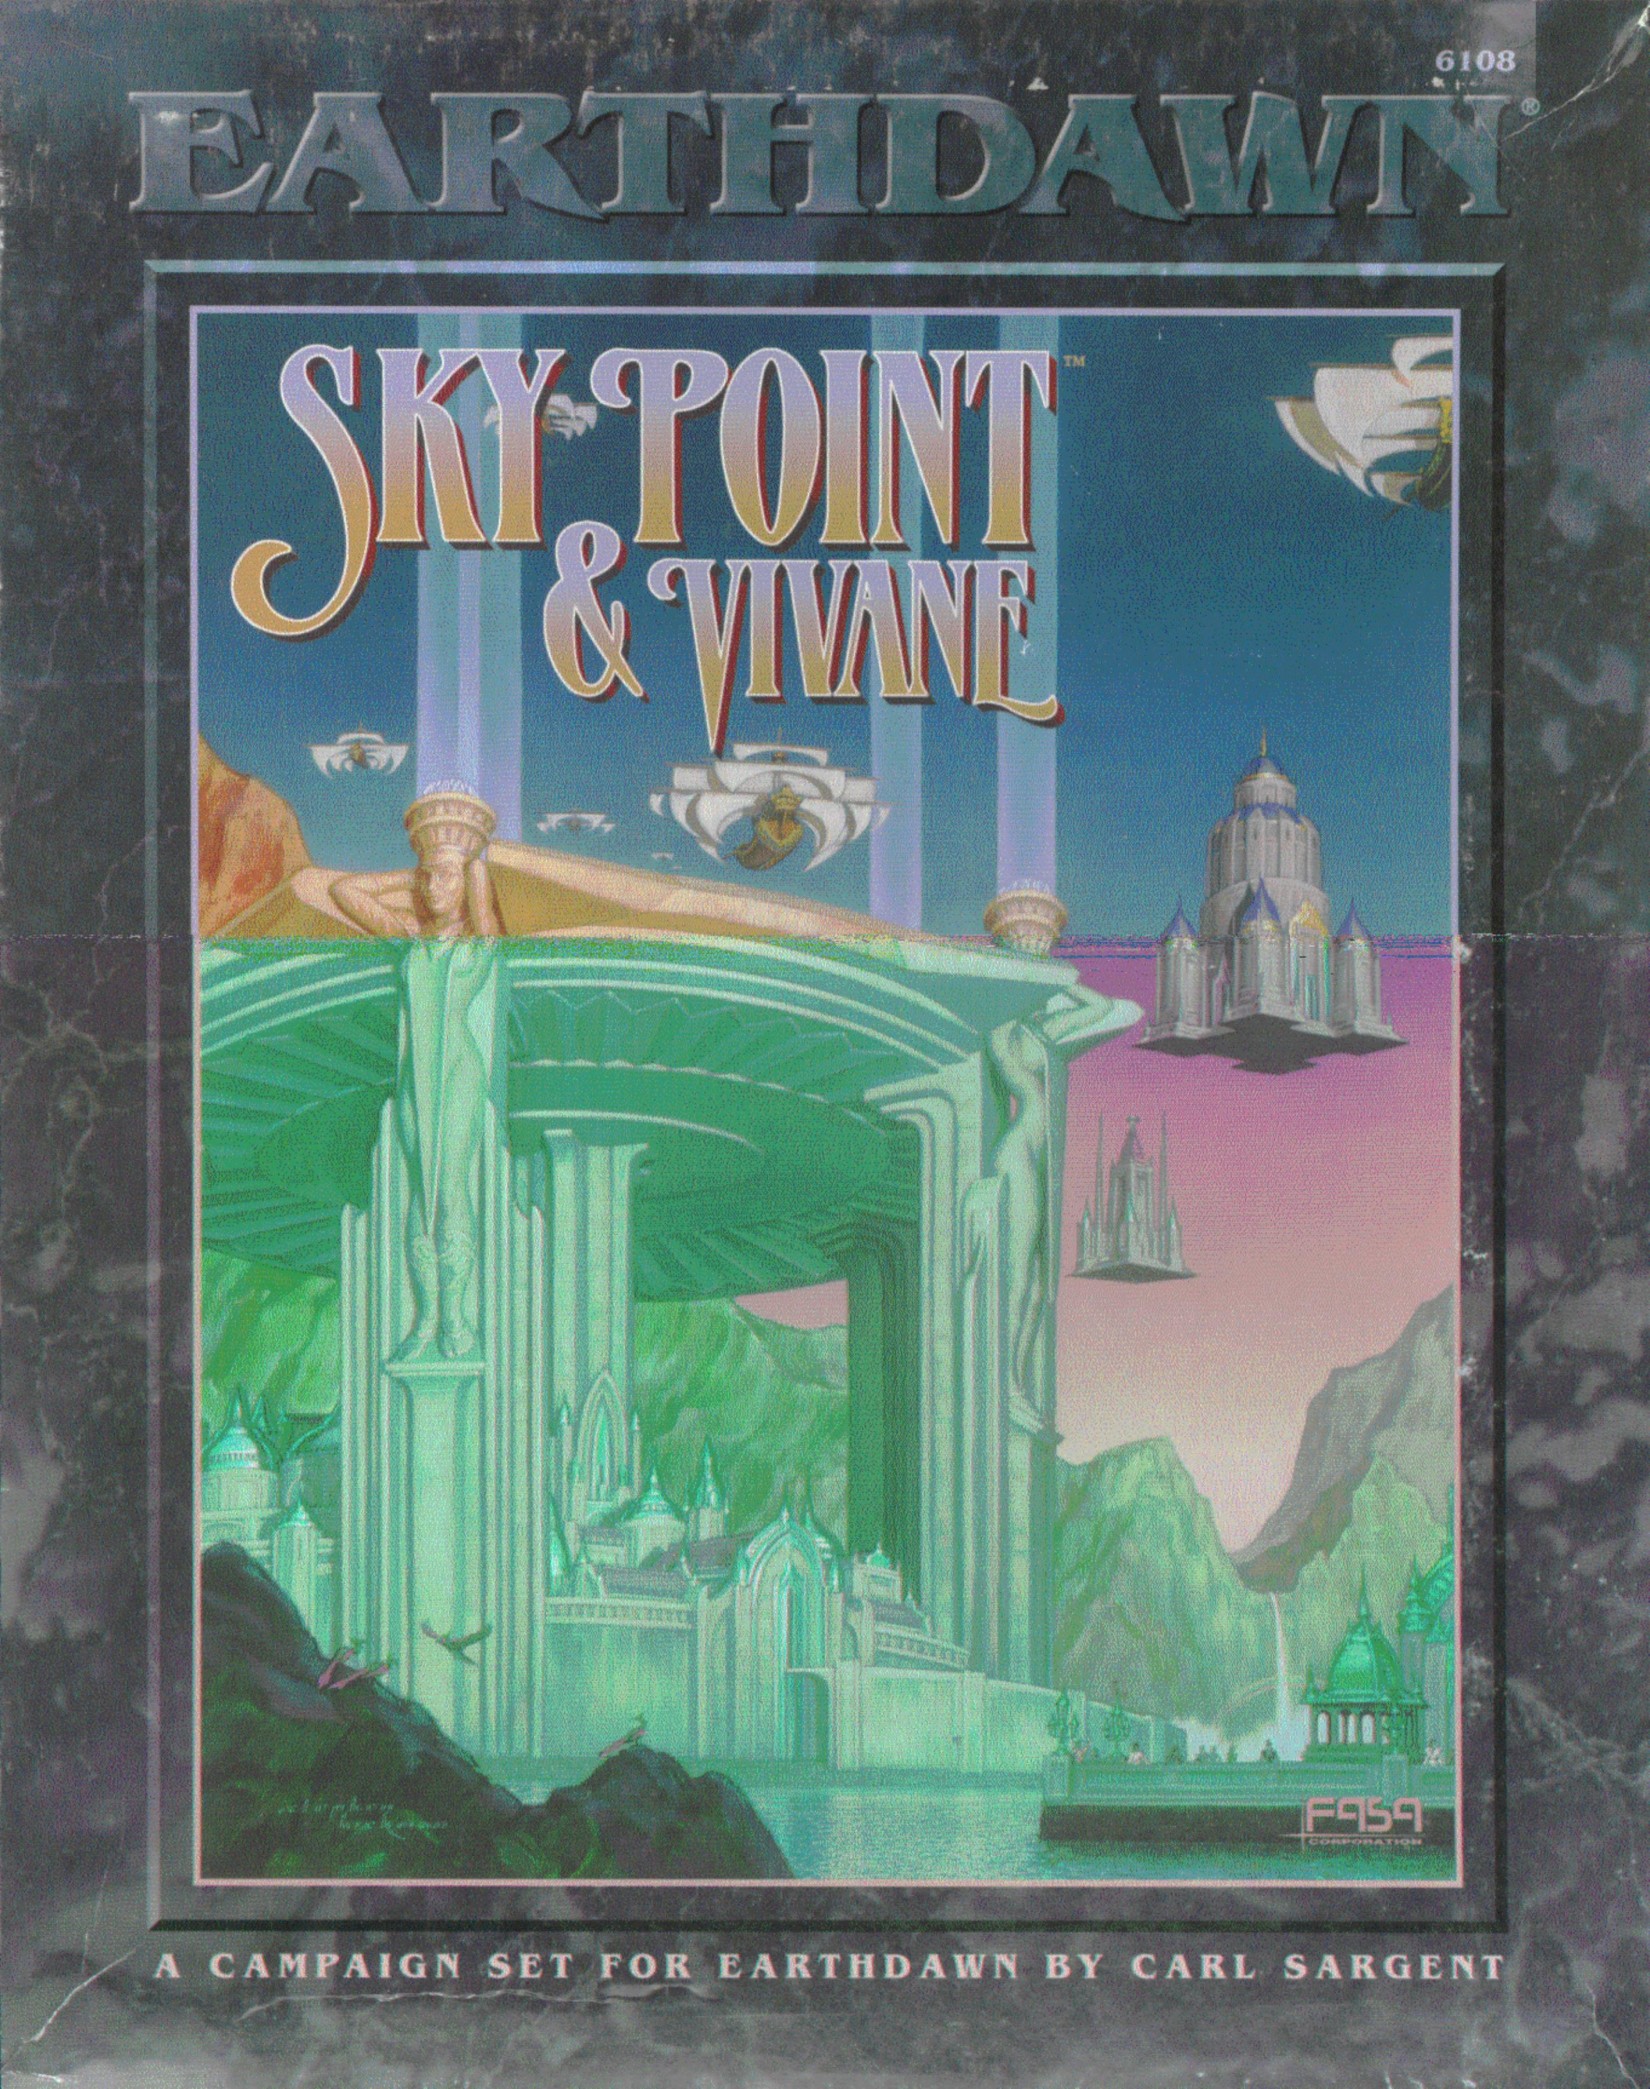 6108 Earthdawn - Sky Point and Vivane Boxed Set